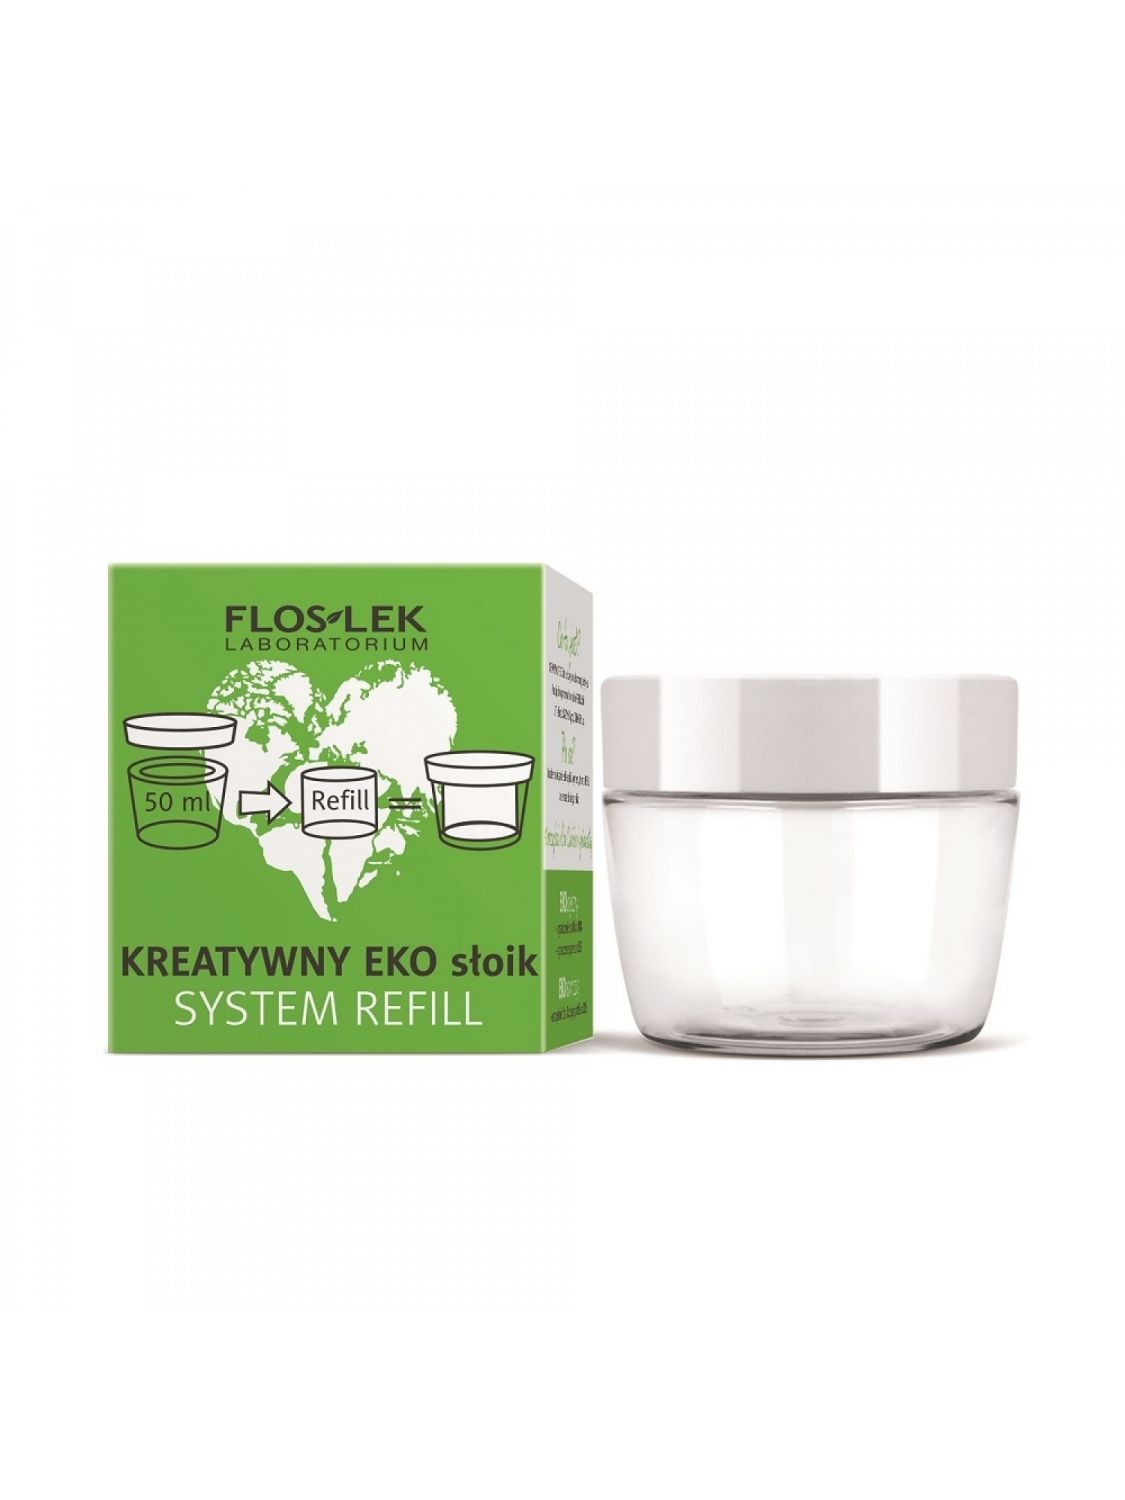 Universal jar for refills of FLOSLEK replacement cartridges